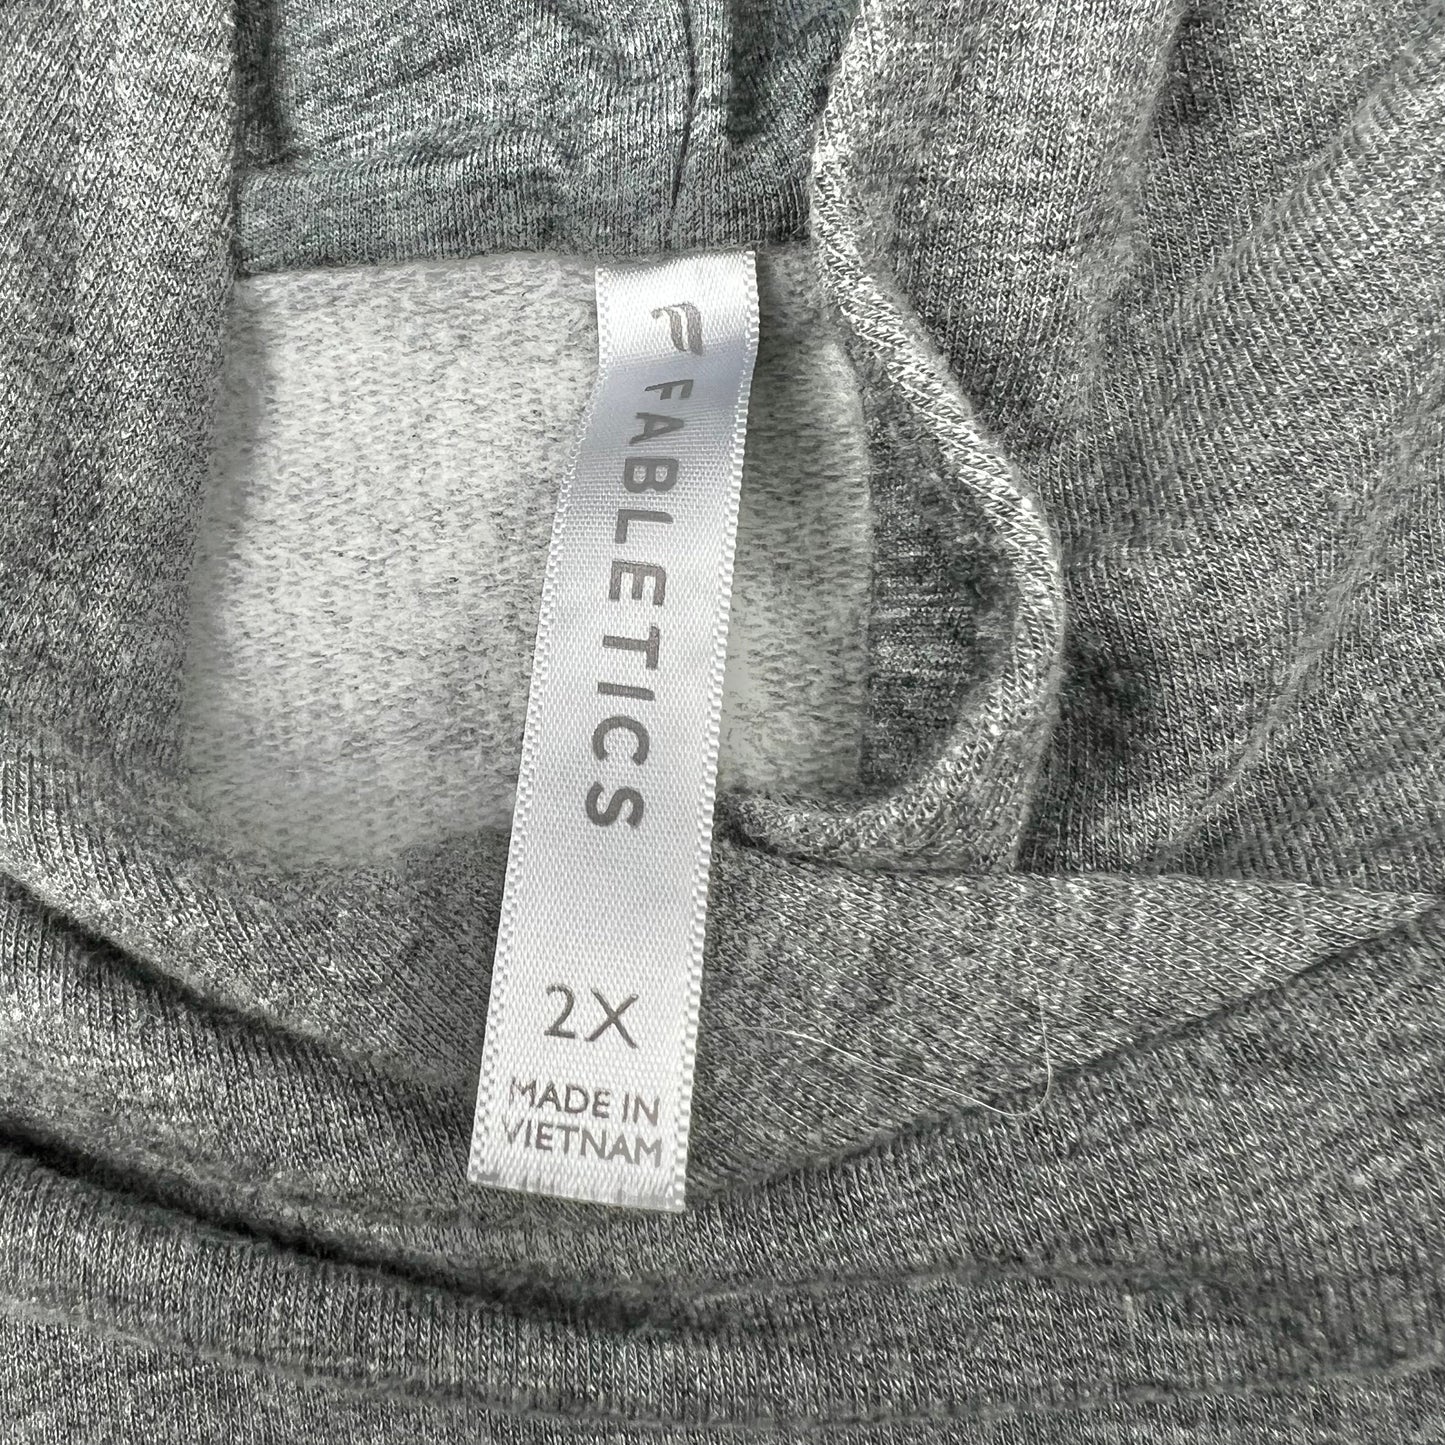 Grey Athletic Sweatshirt Hoodie By Fabletics, Size: 2x